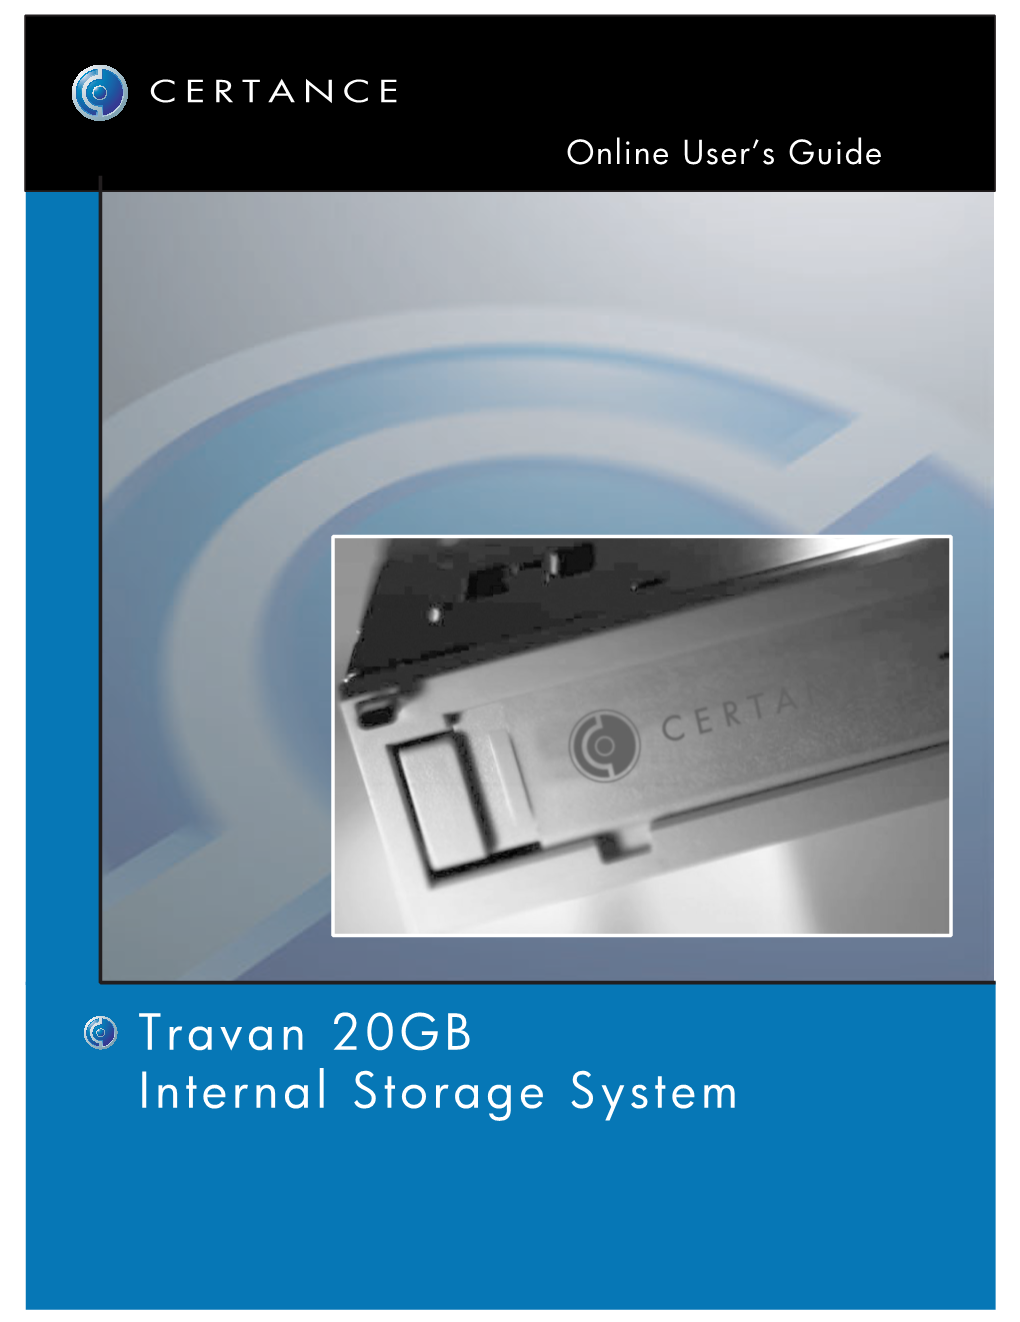 Travan 20GB Internal Storage System